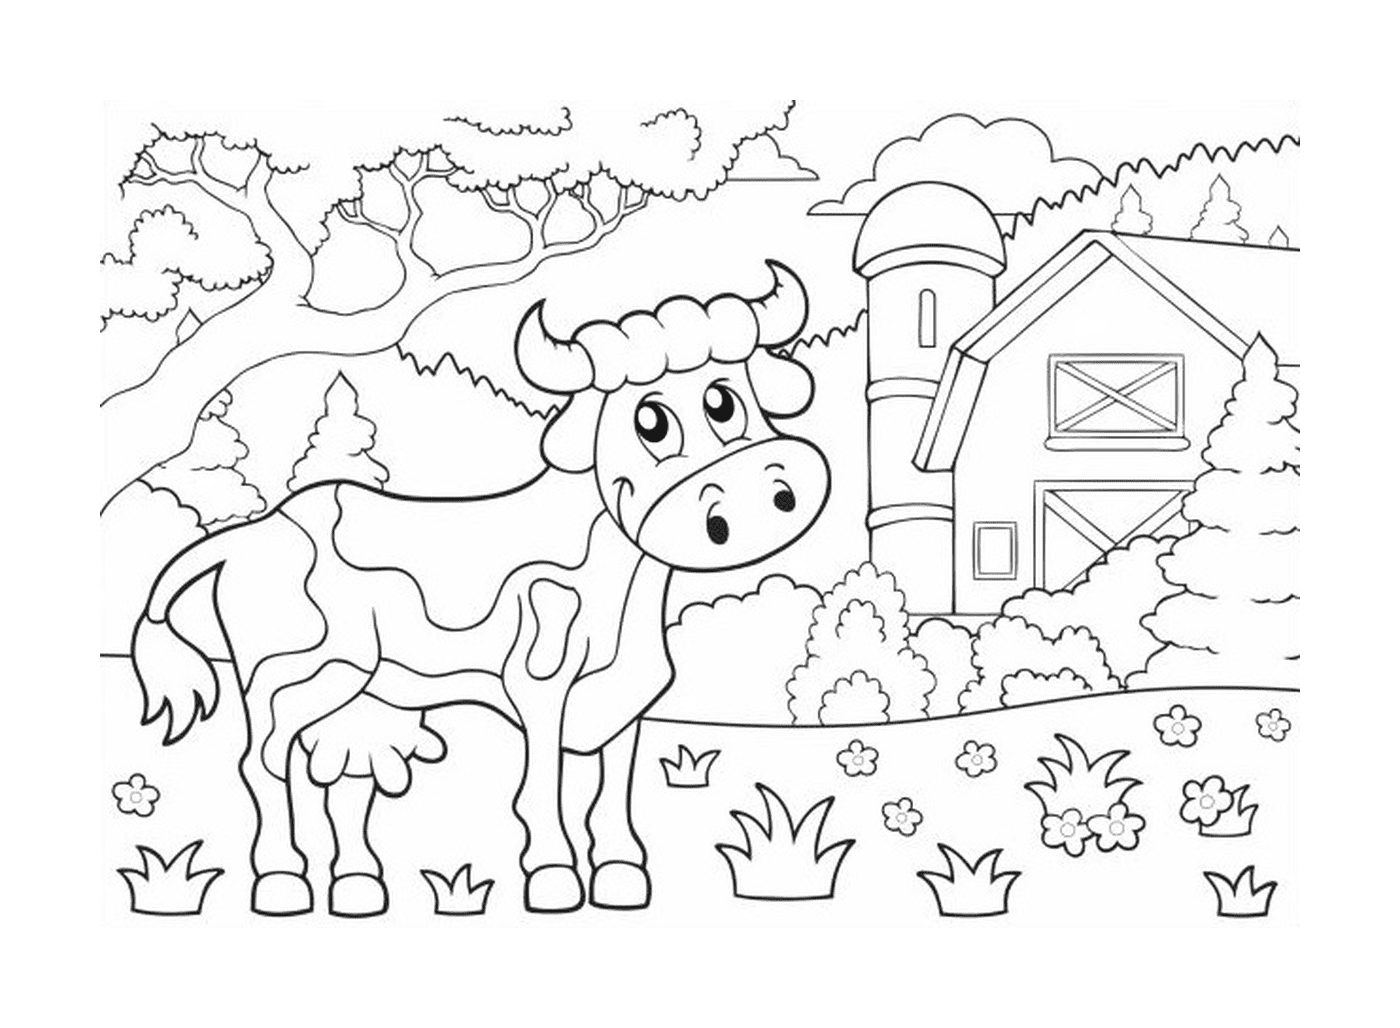  Animal farm, cow 